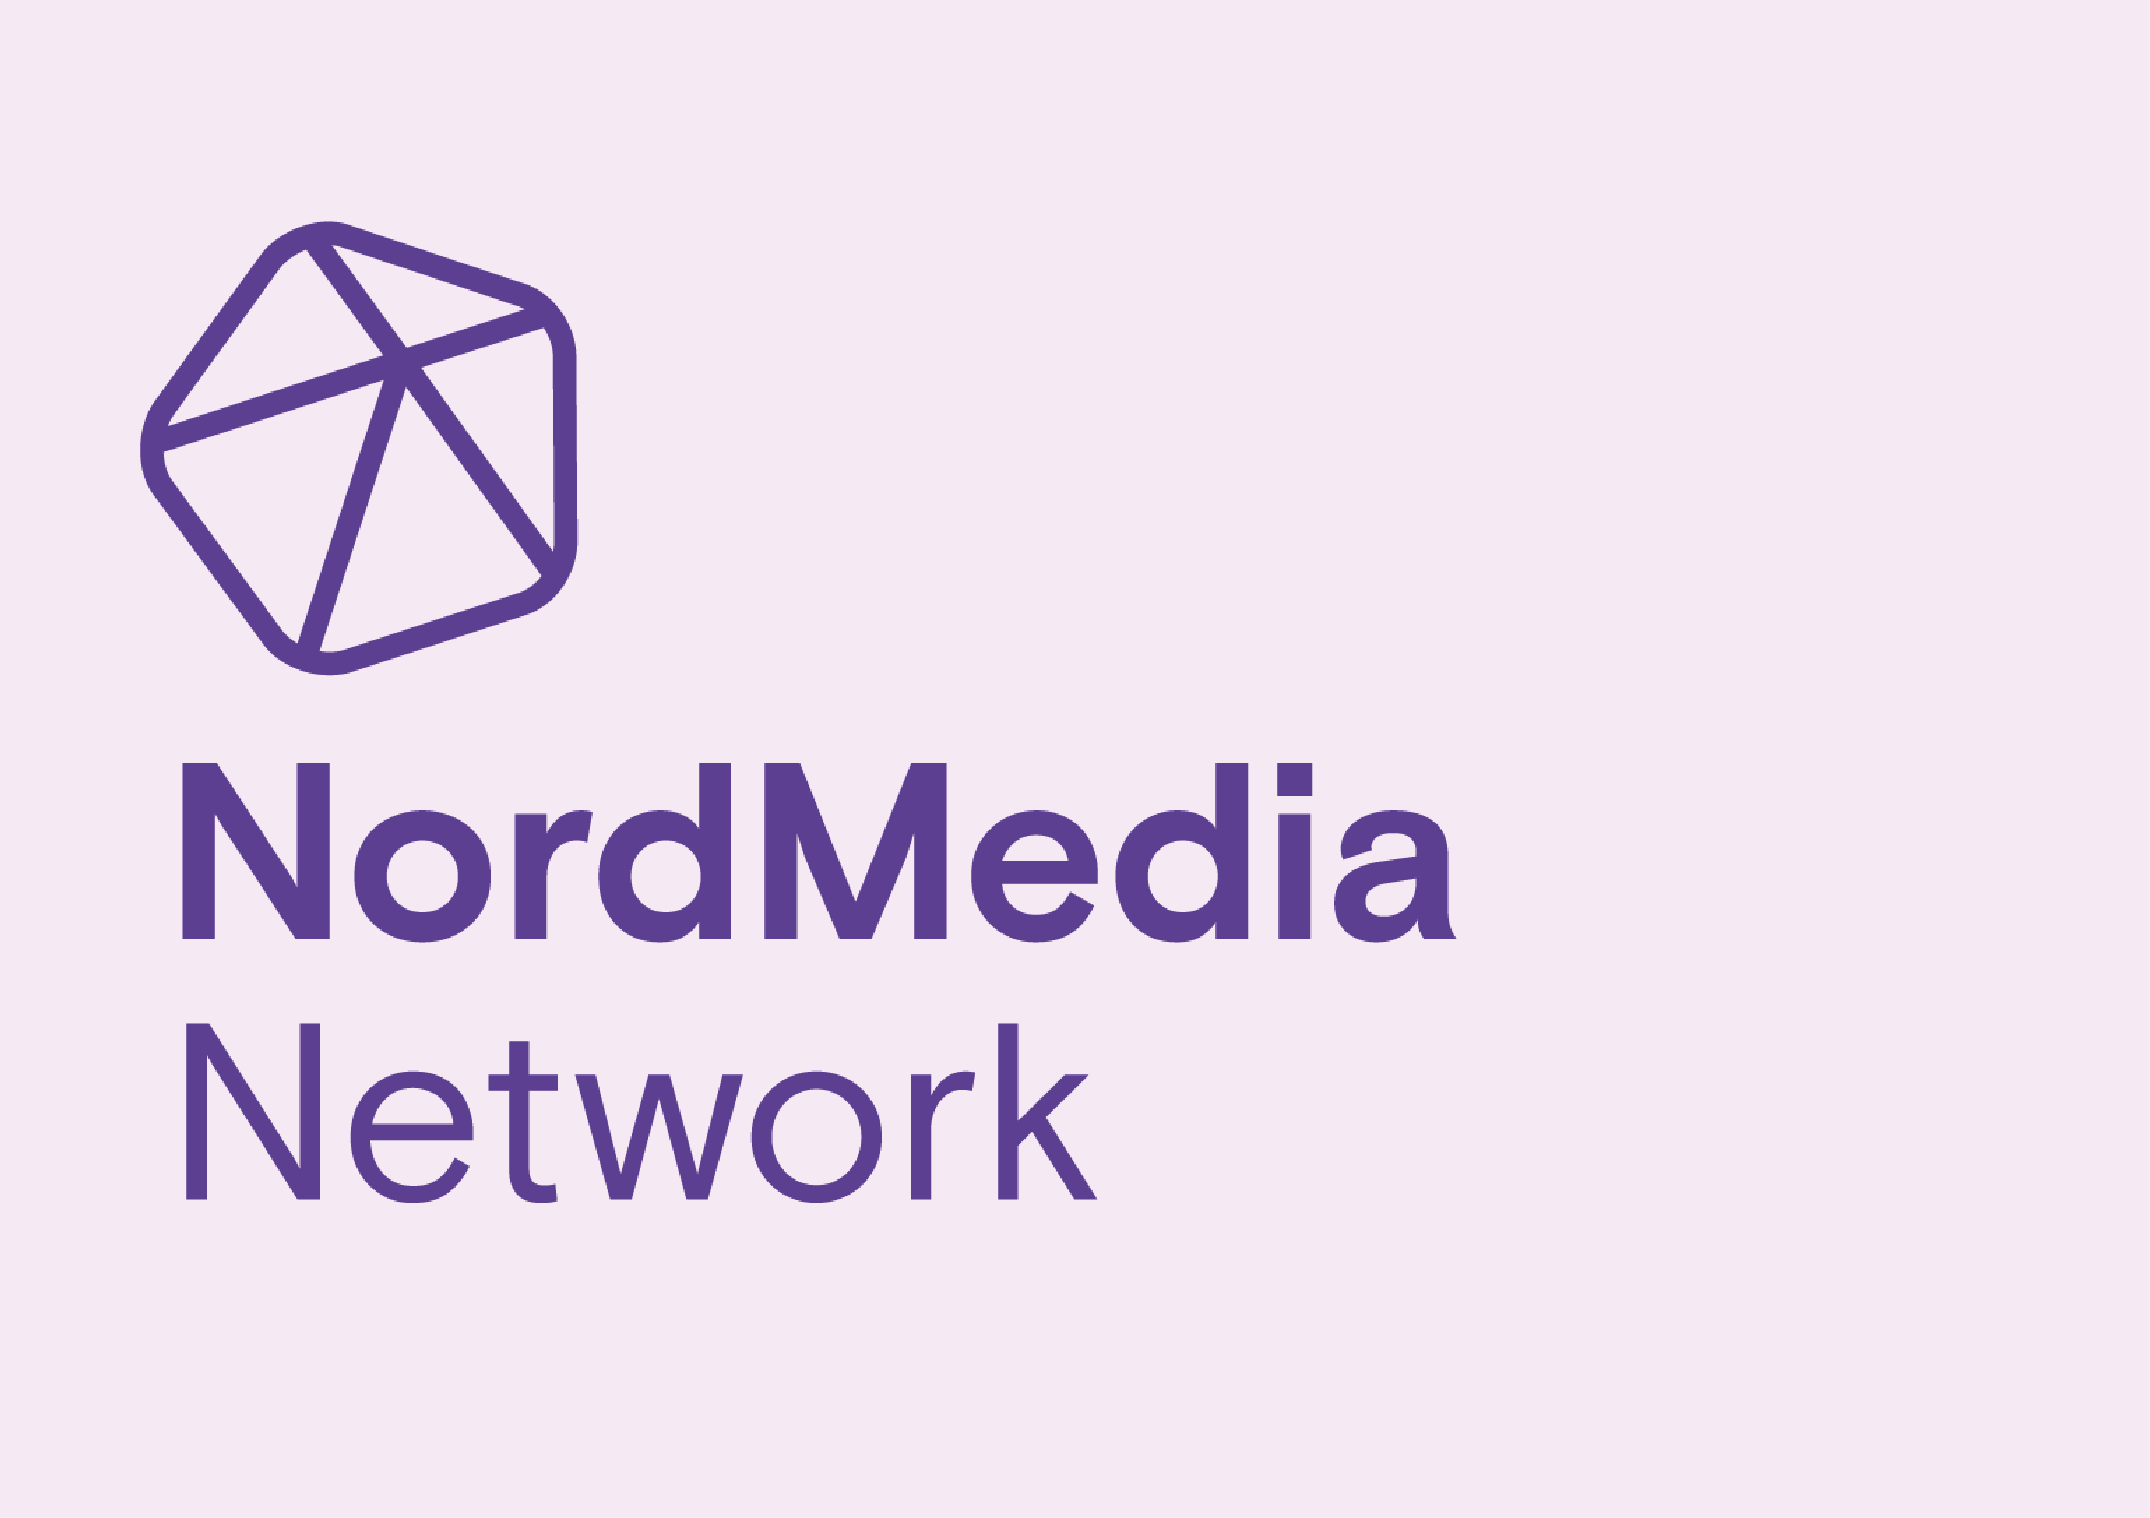 NordMedia Network's logo.